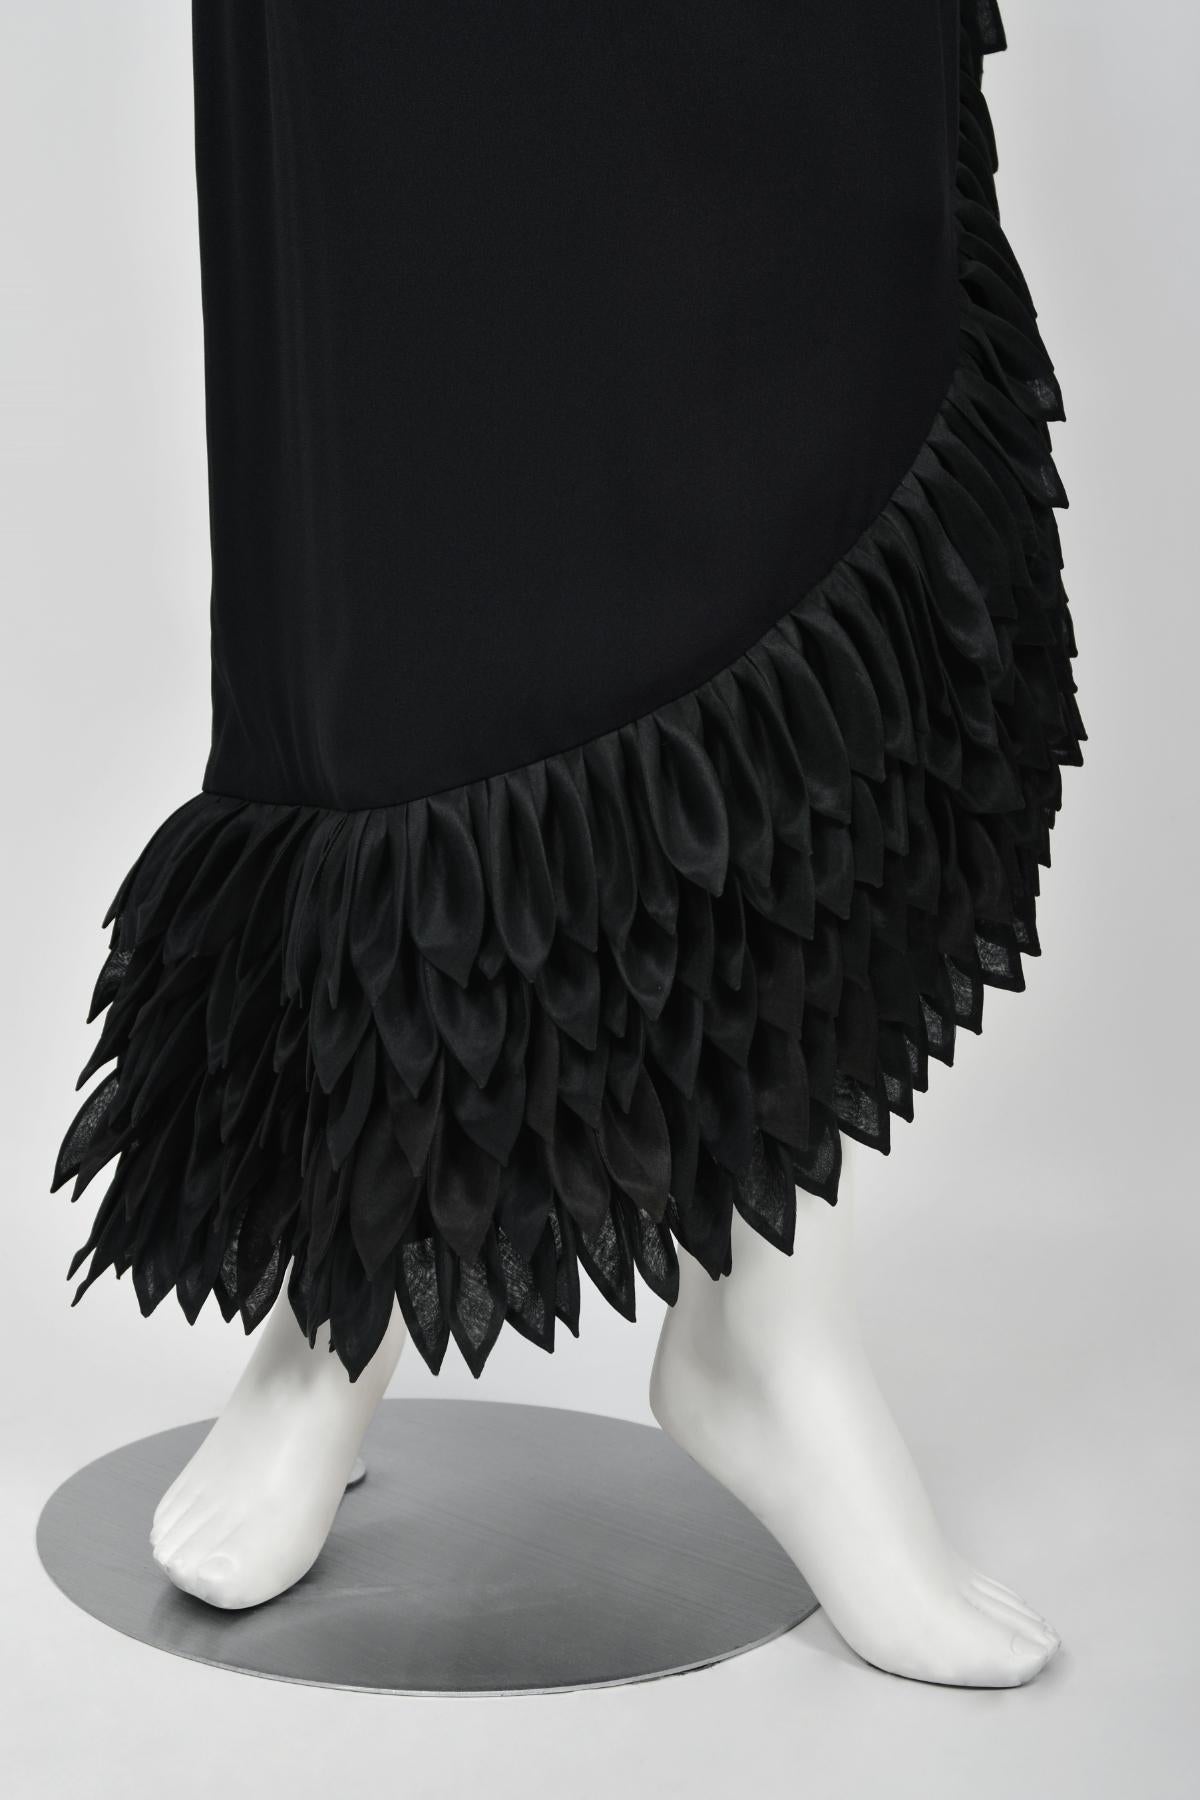 1959 Hall Ludlow Couture Museum-Held Black Silk Appliquéd Petals Hourglass Gown  13